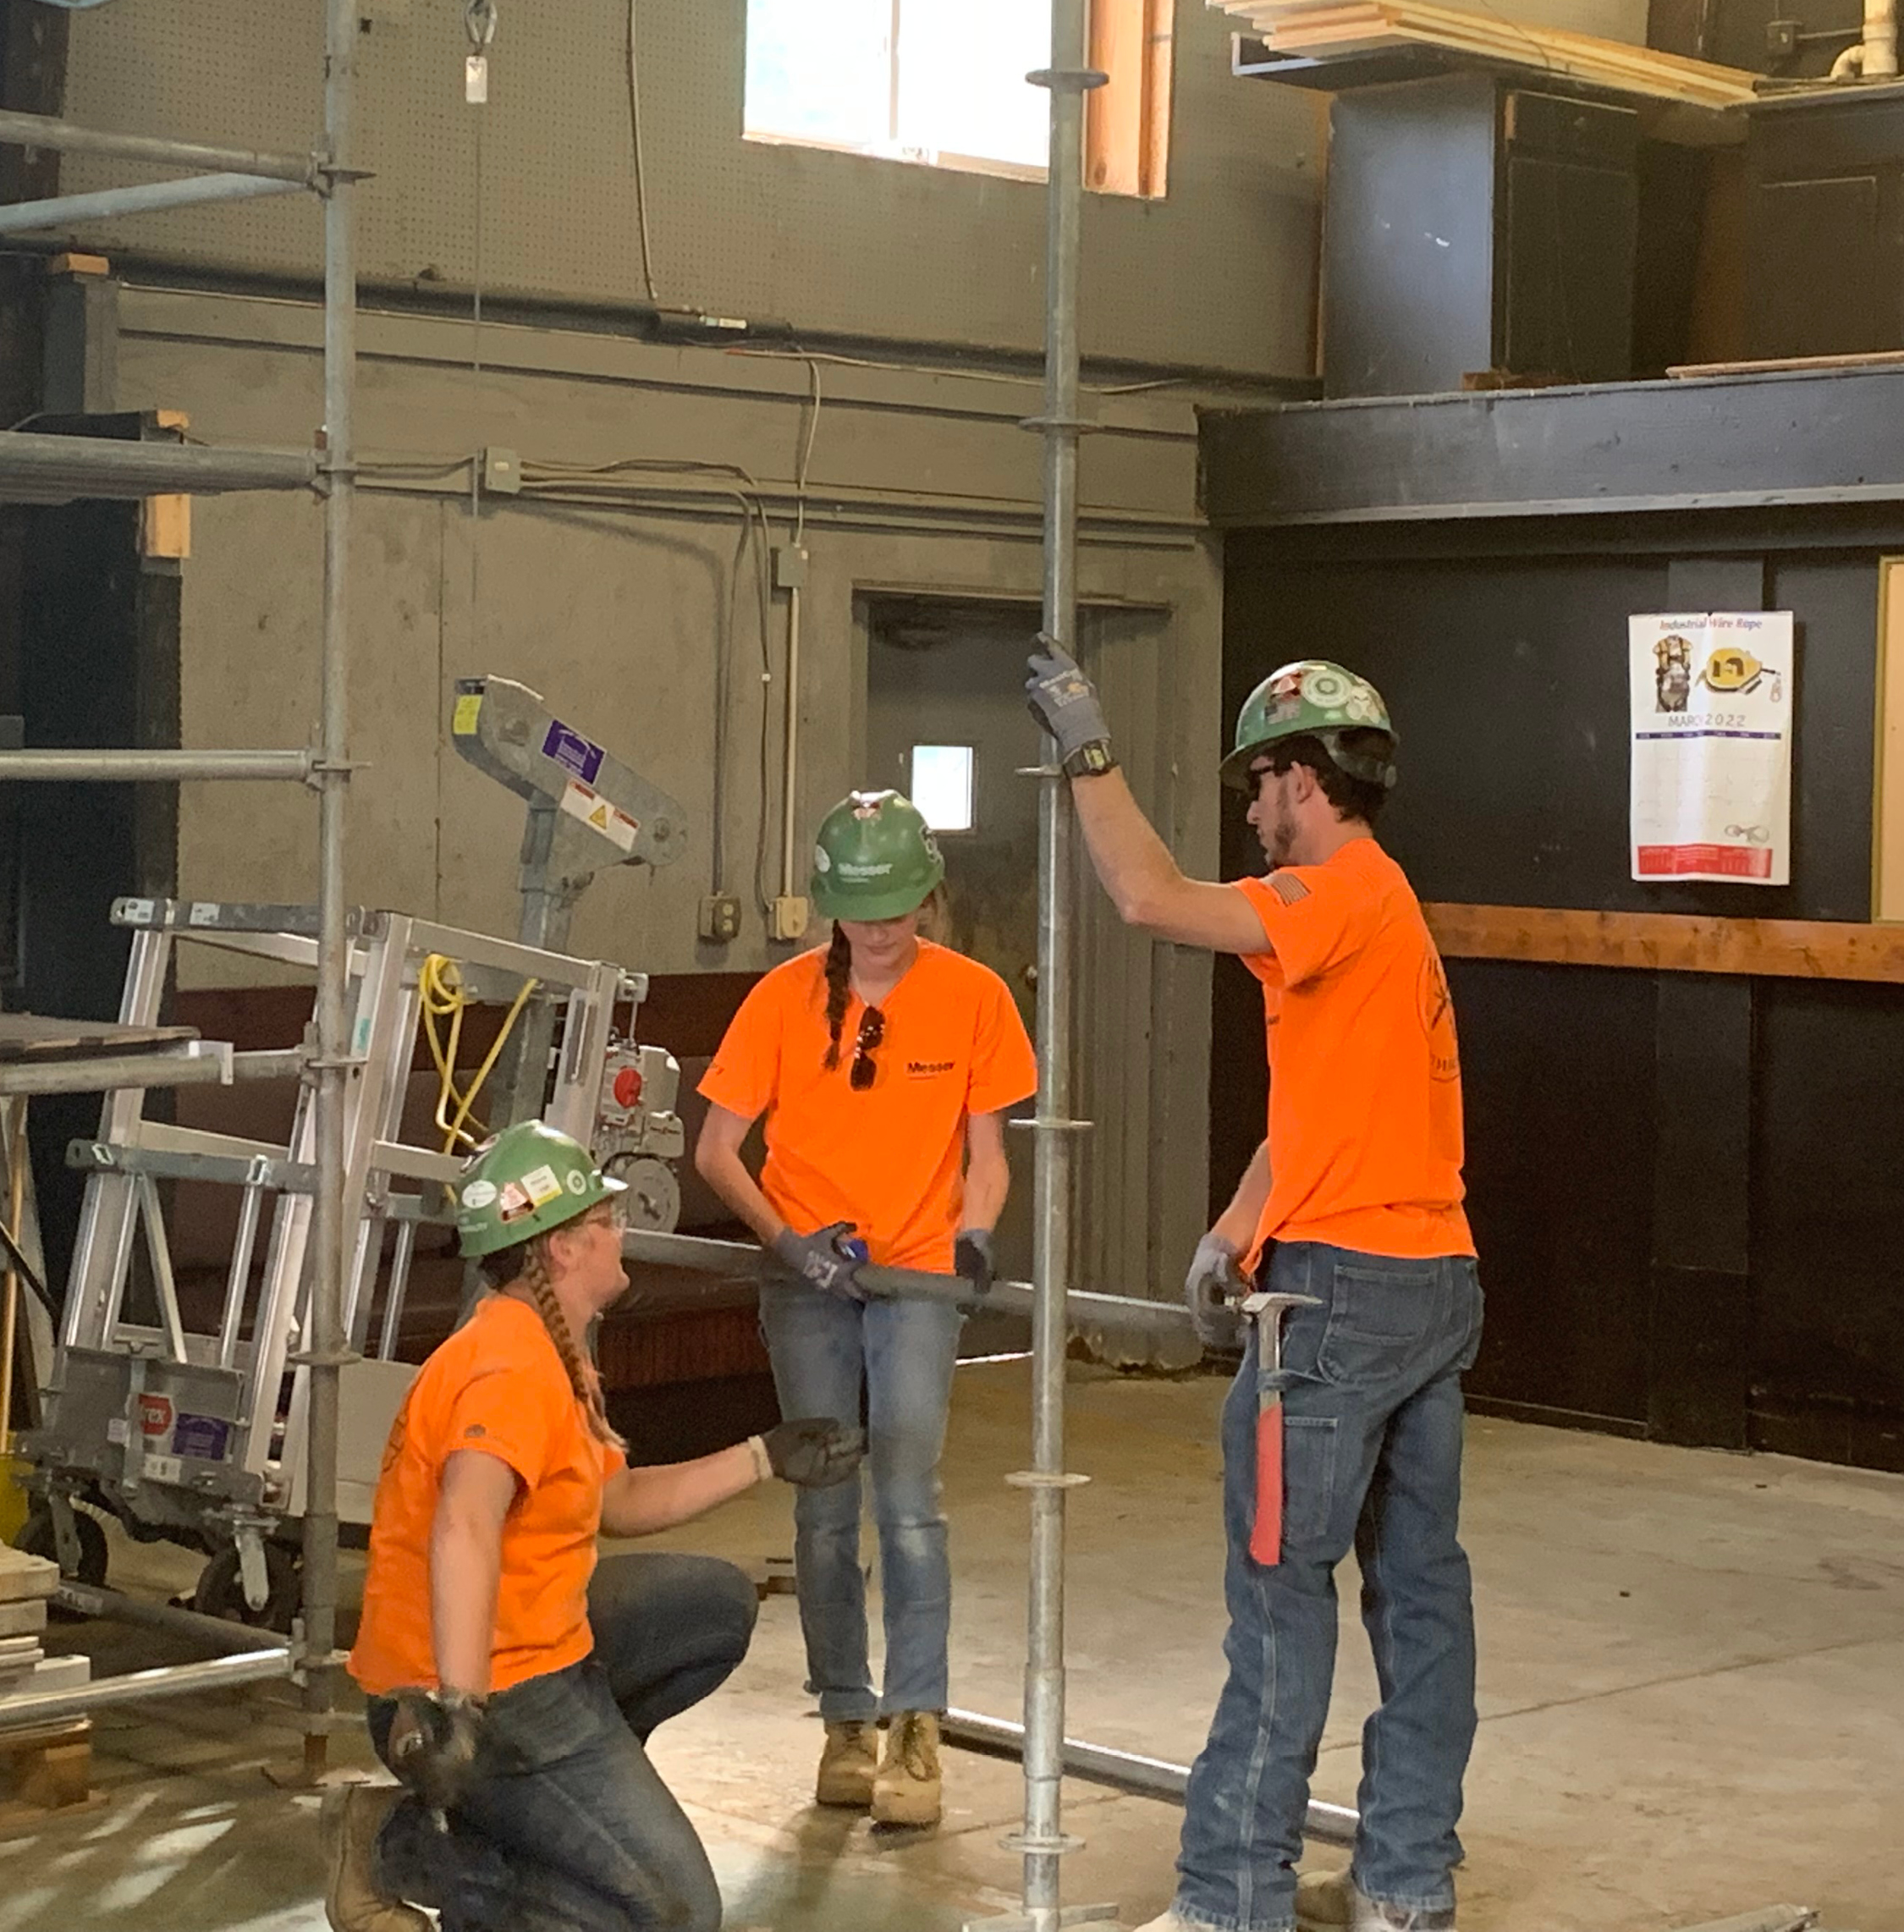 Apprenticeship hands-on scaffolding training